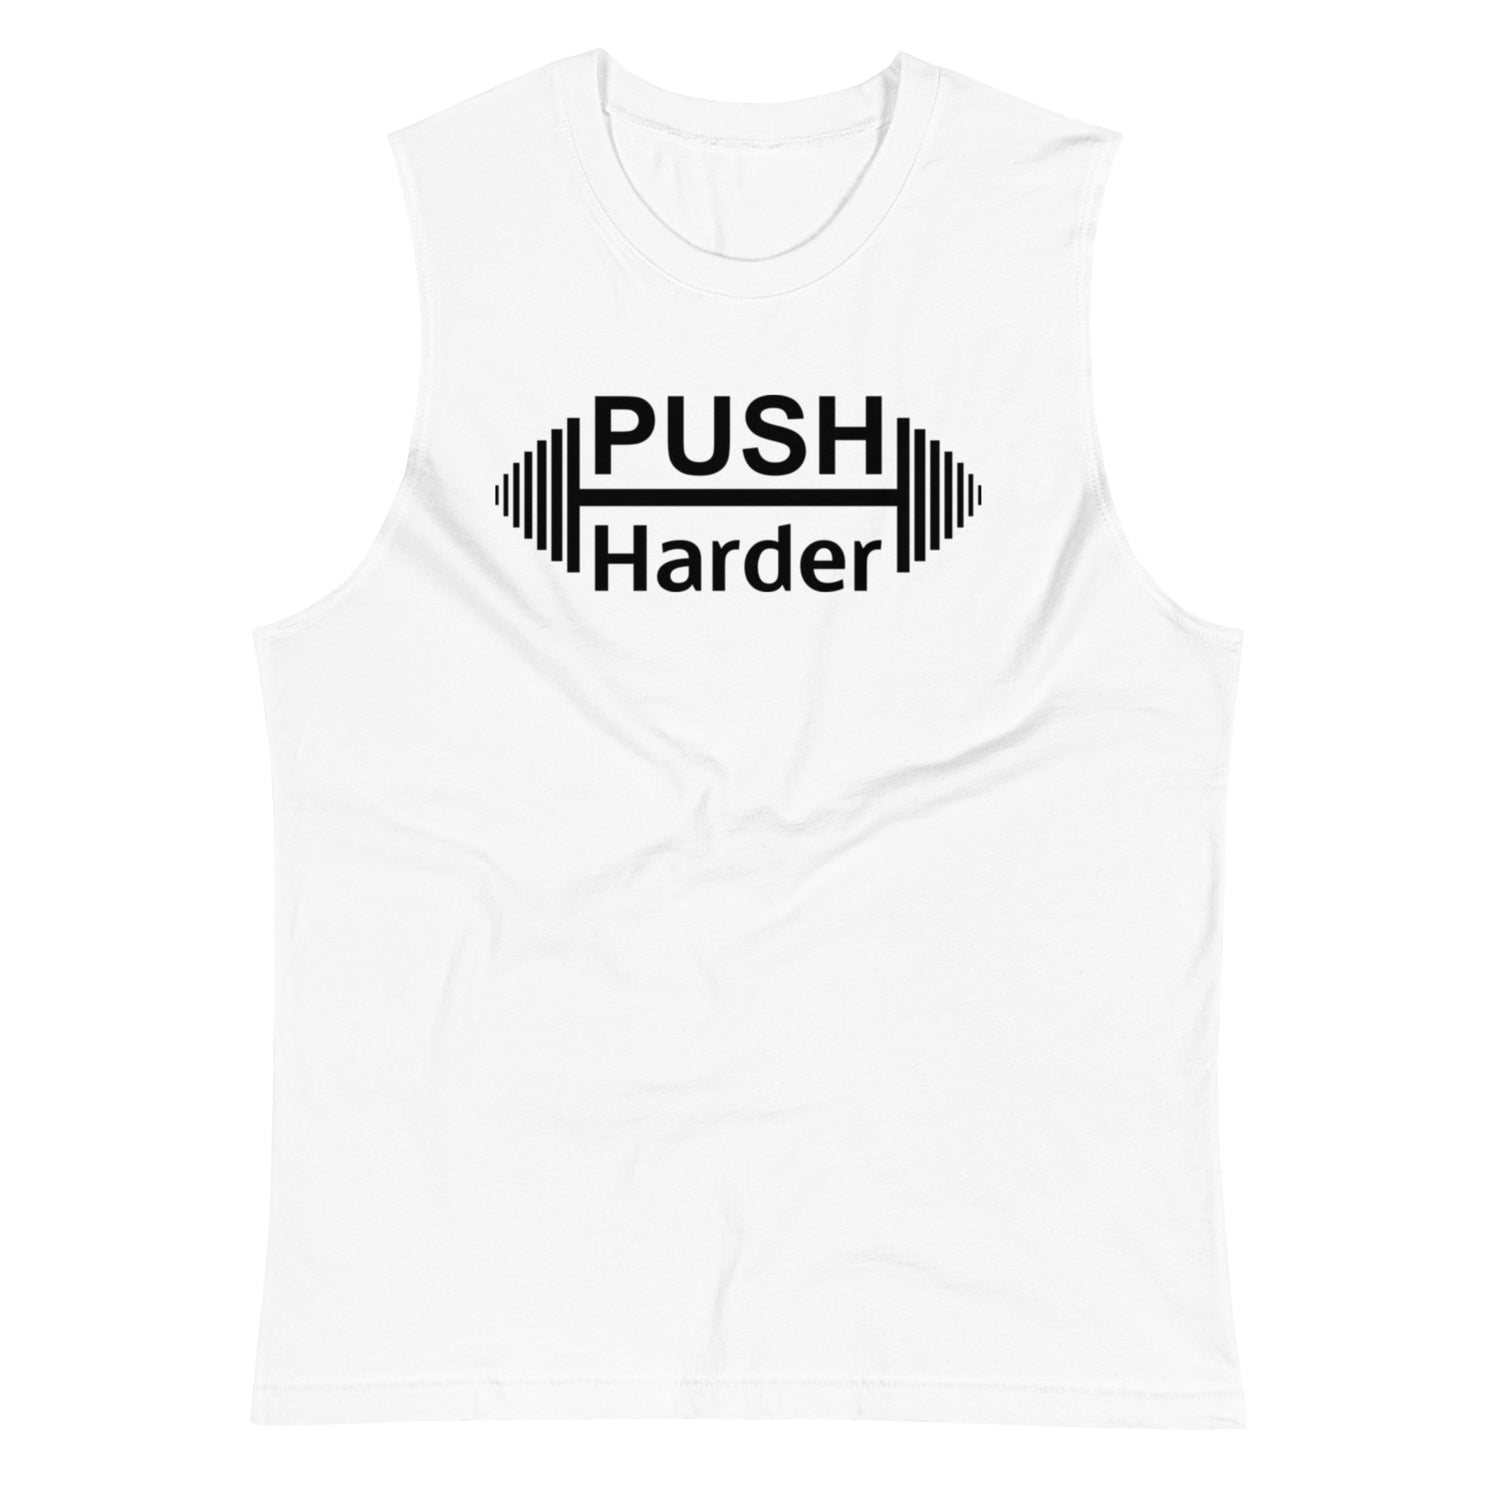 Muscle Shirt - Push Harder